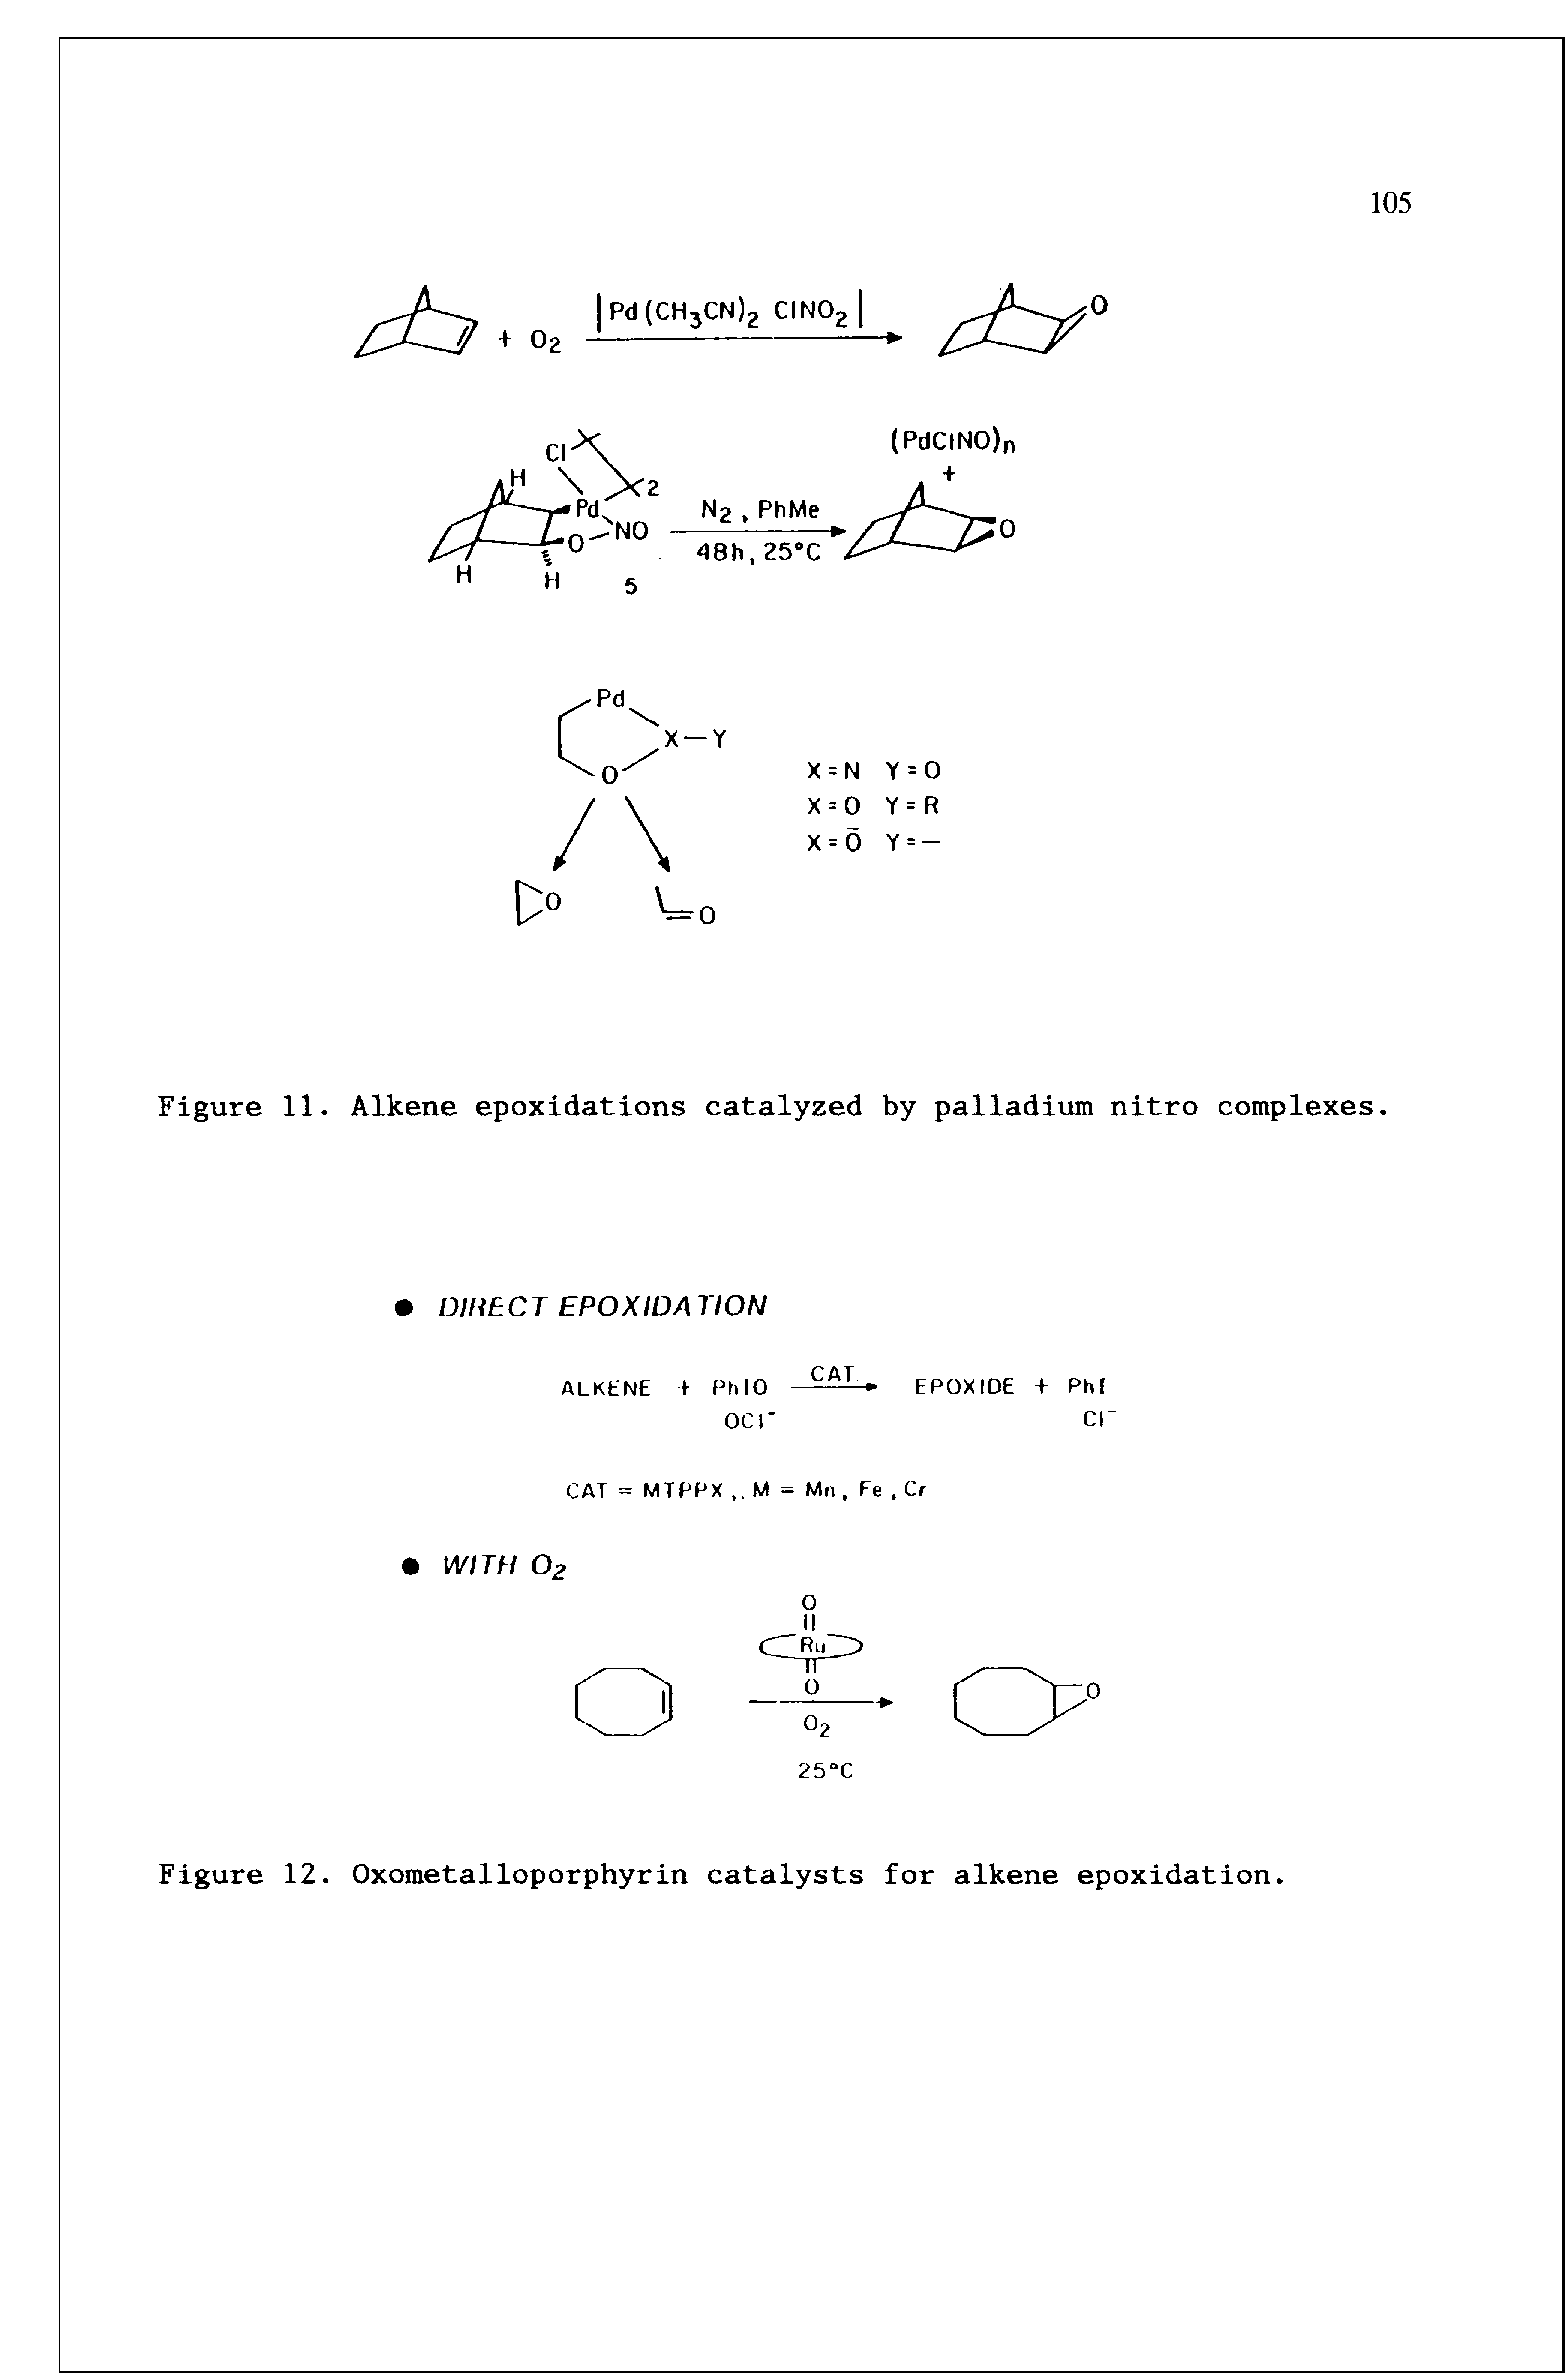 Figure 11. Alkene epoxidations catalyzed by palladium nitro complexes.